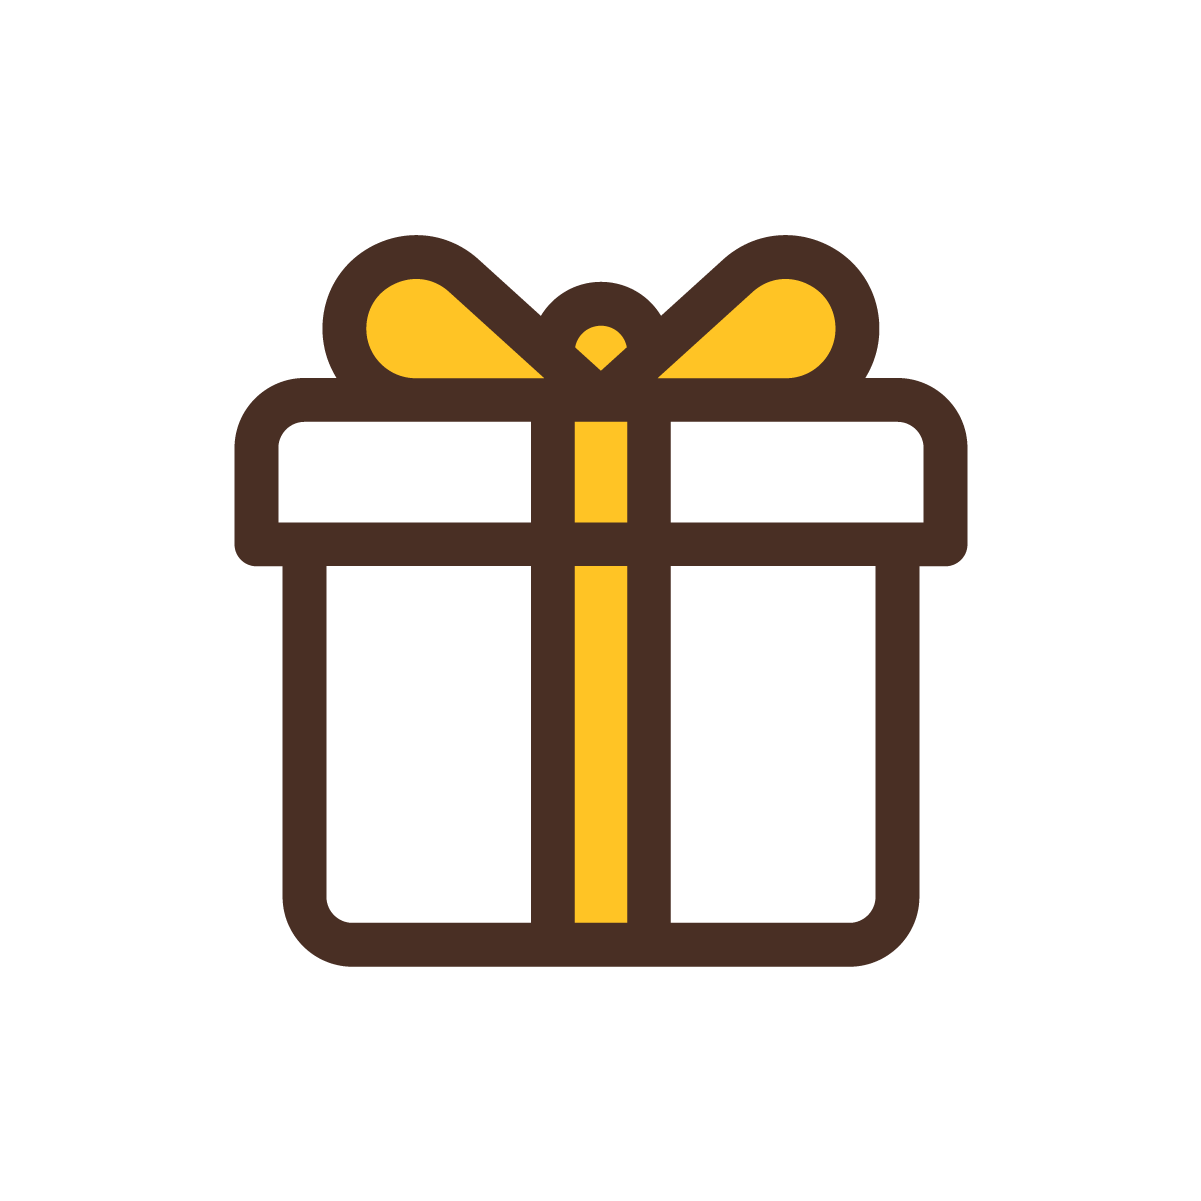 A gift box icon